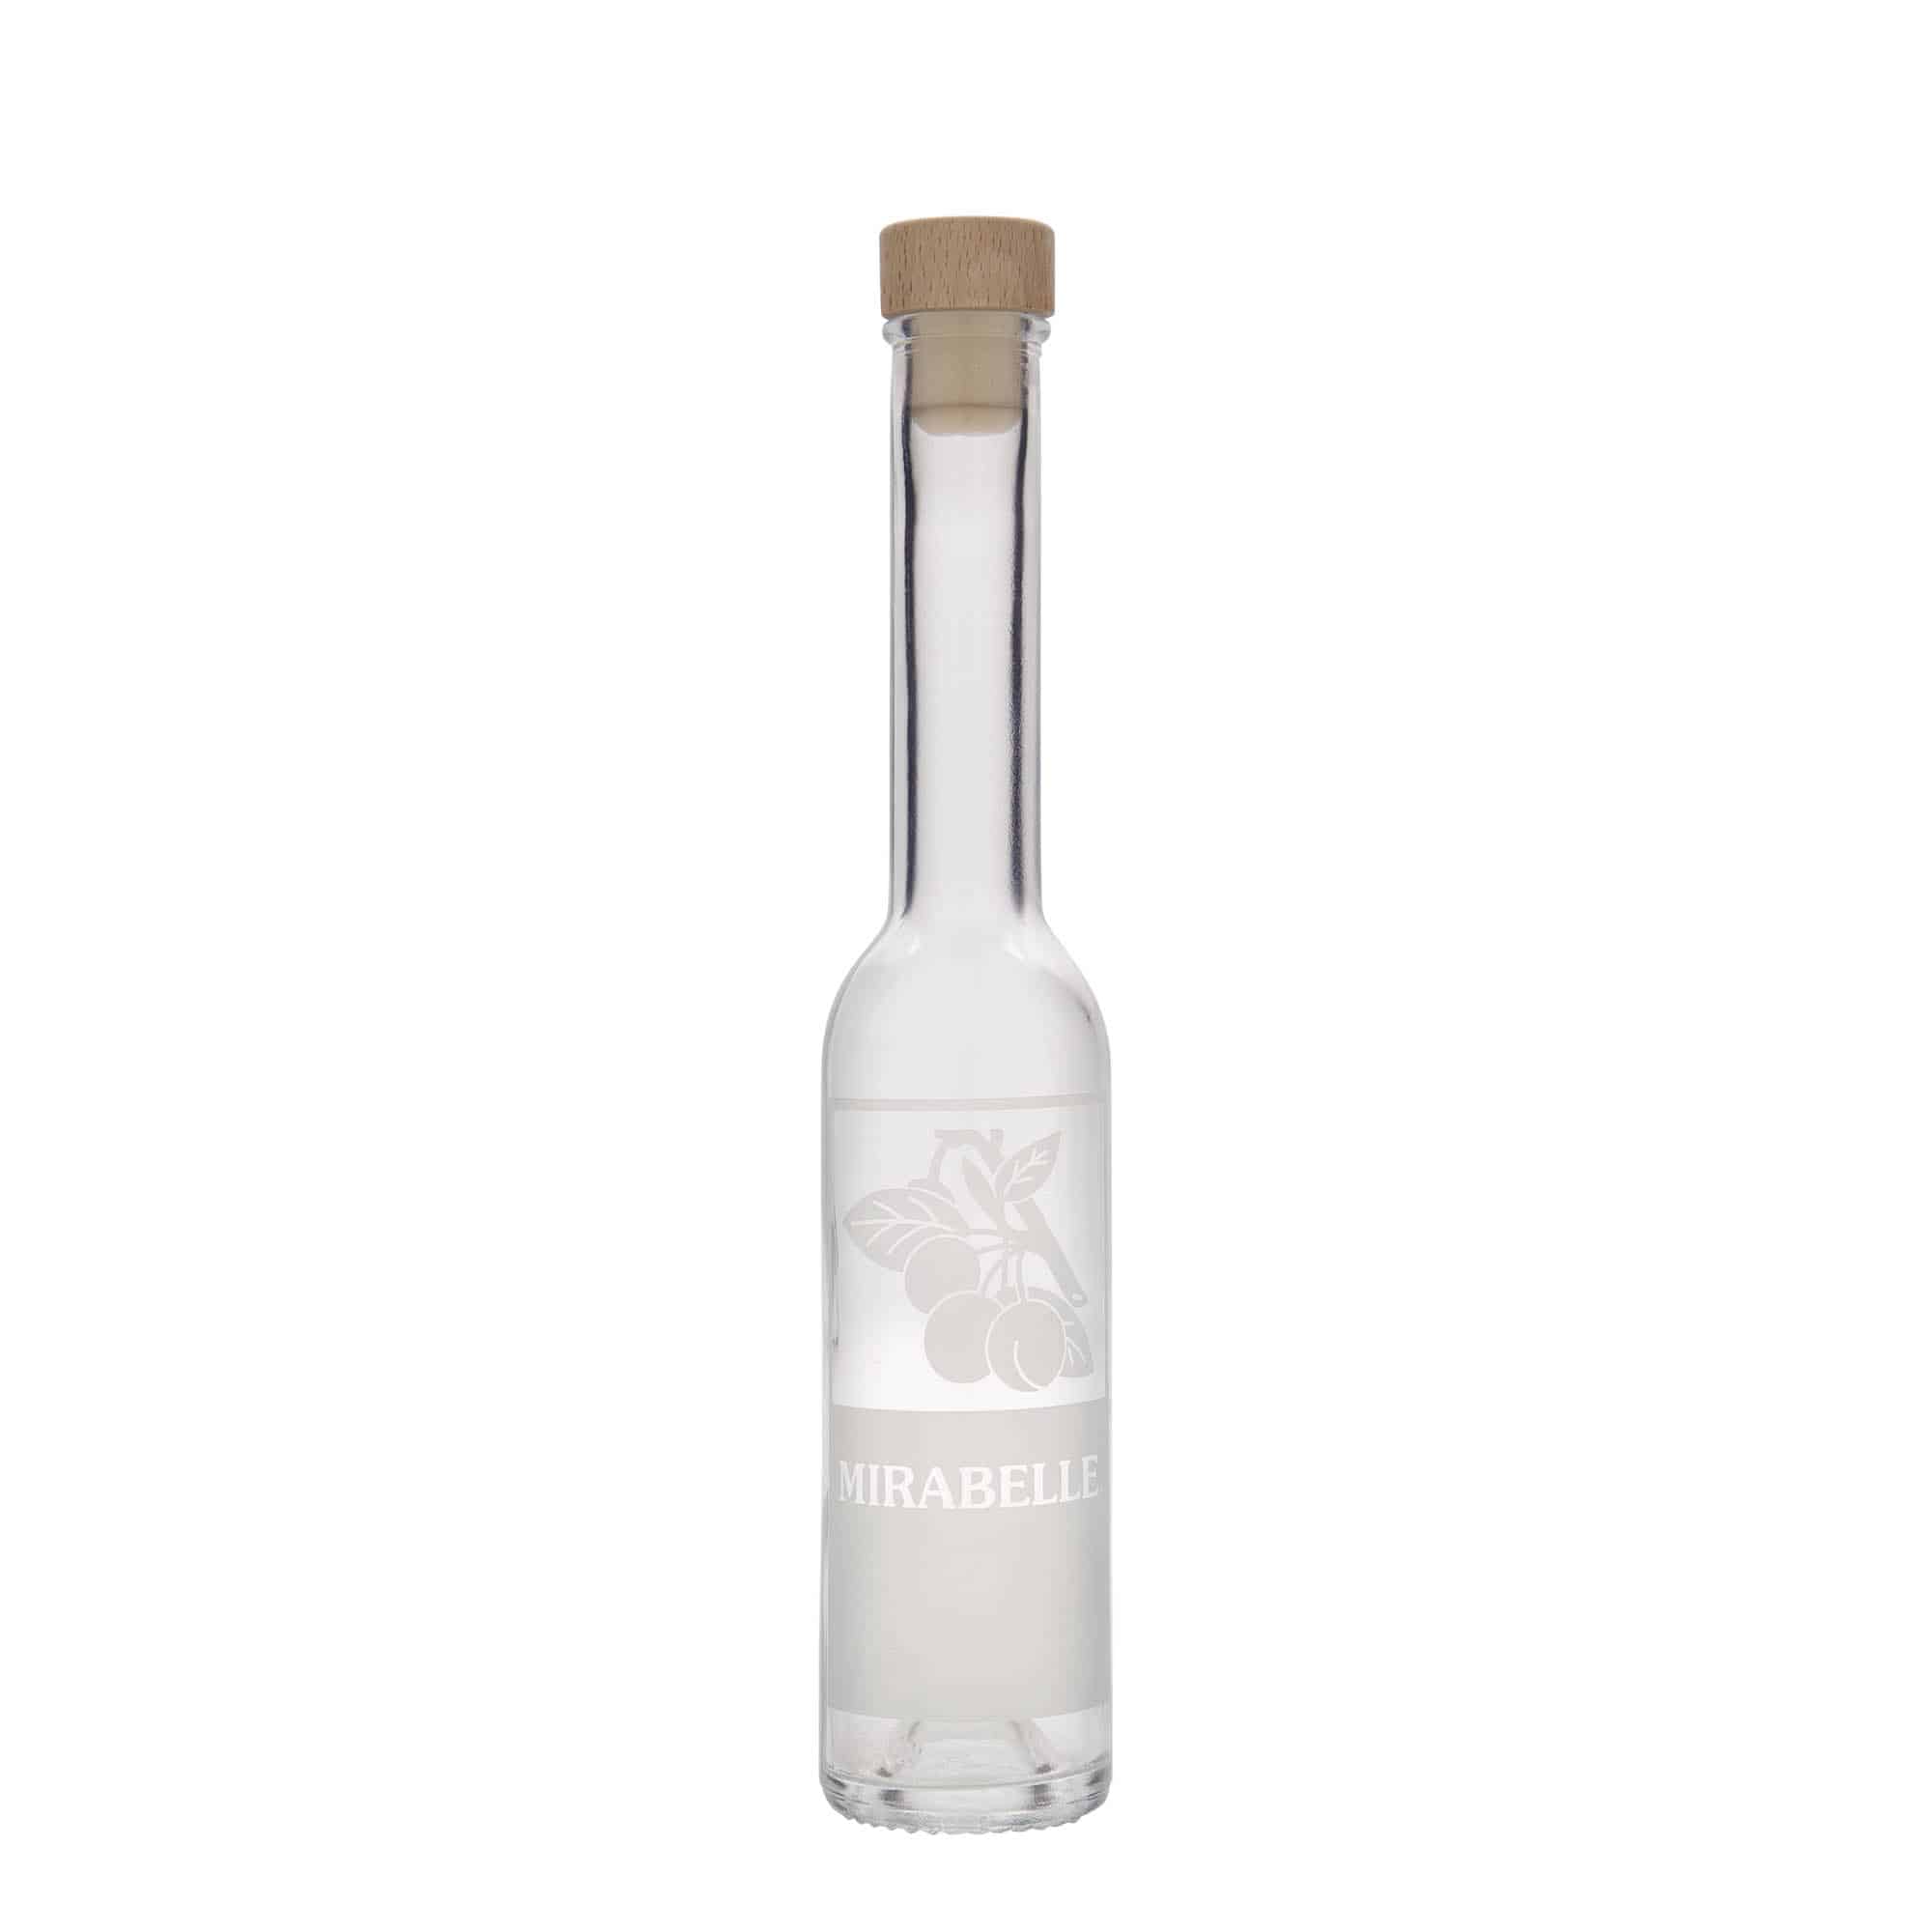 200 ml glass bottle 'Opera', print: mirabelle, closure: cork